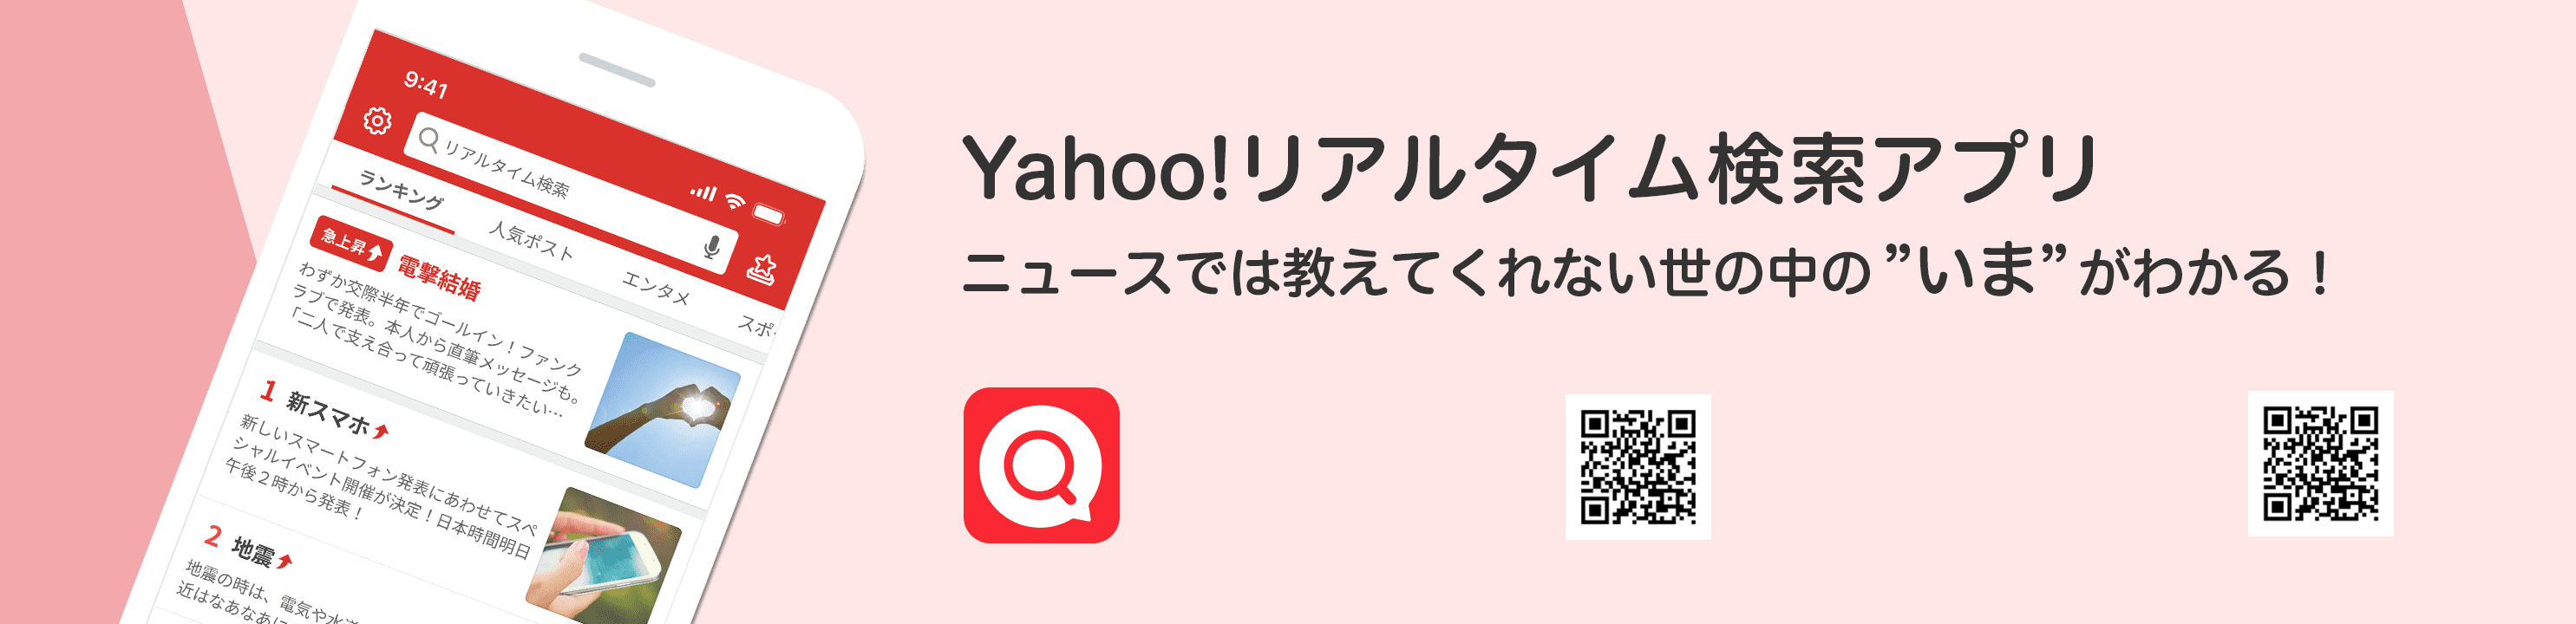 Yahoo!リアルタイム検索アプリ